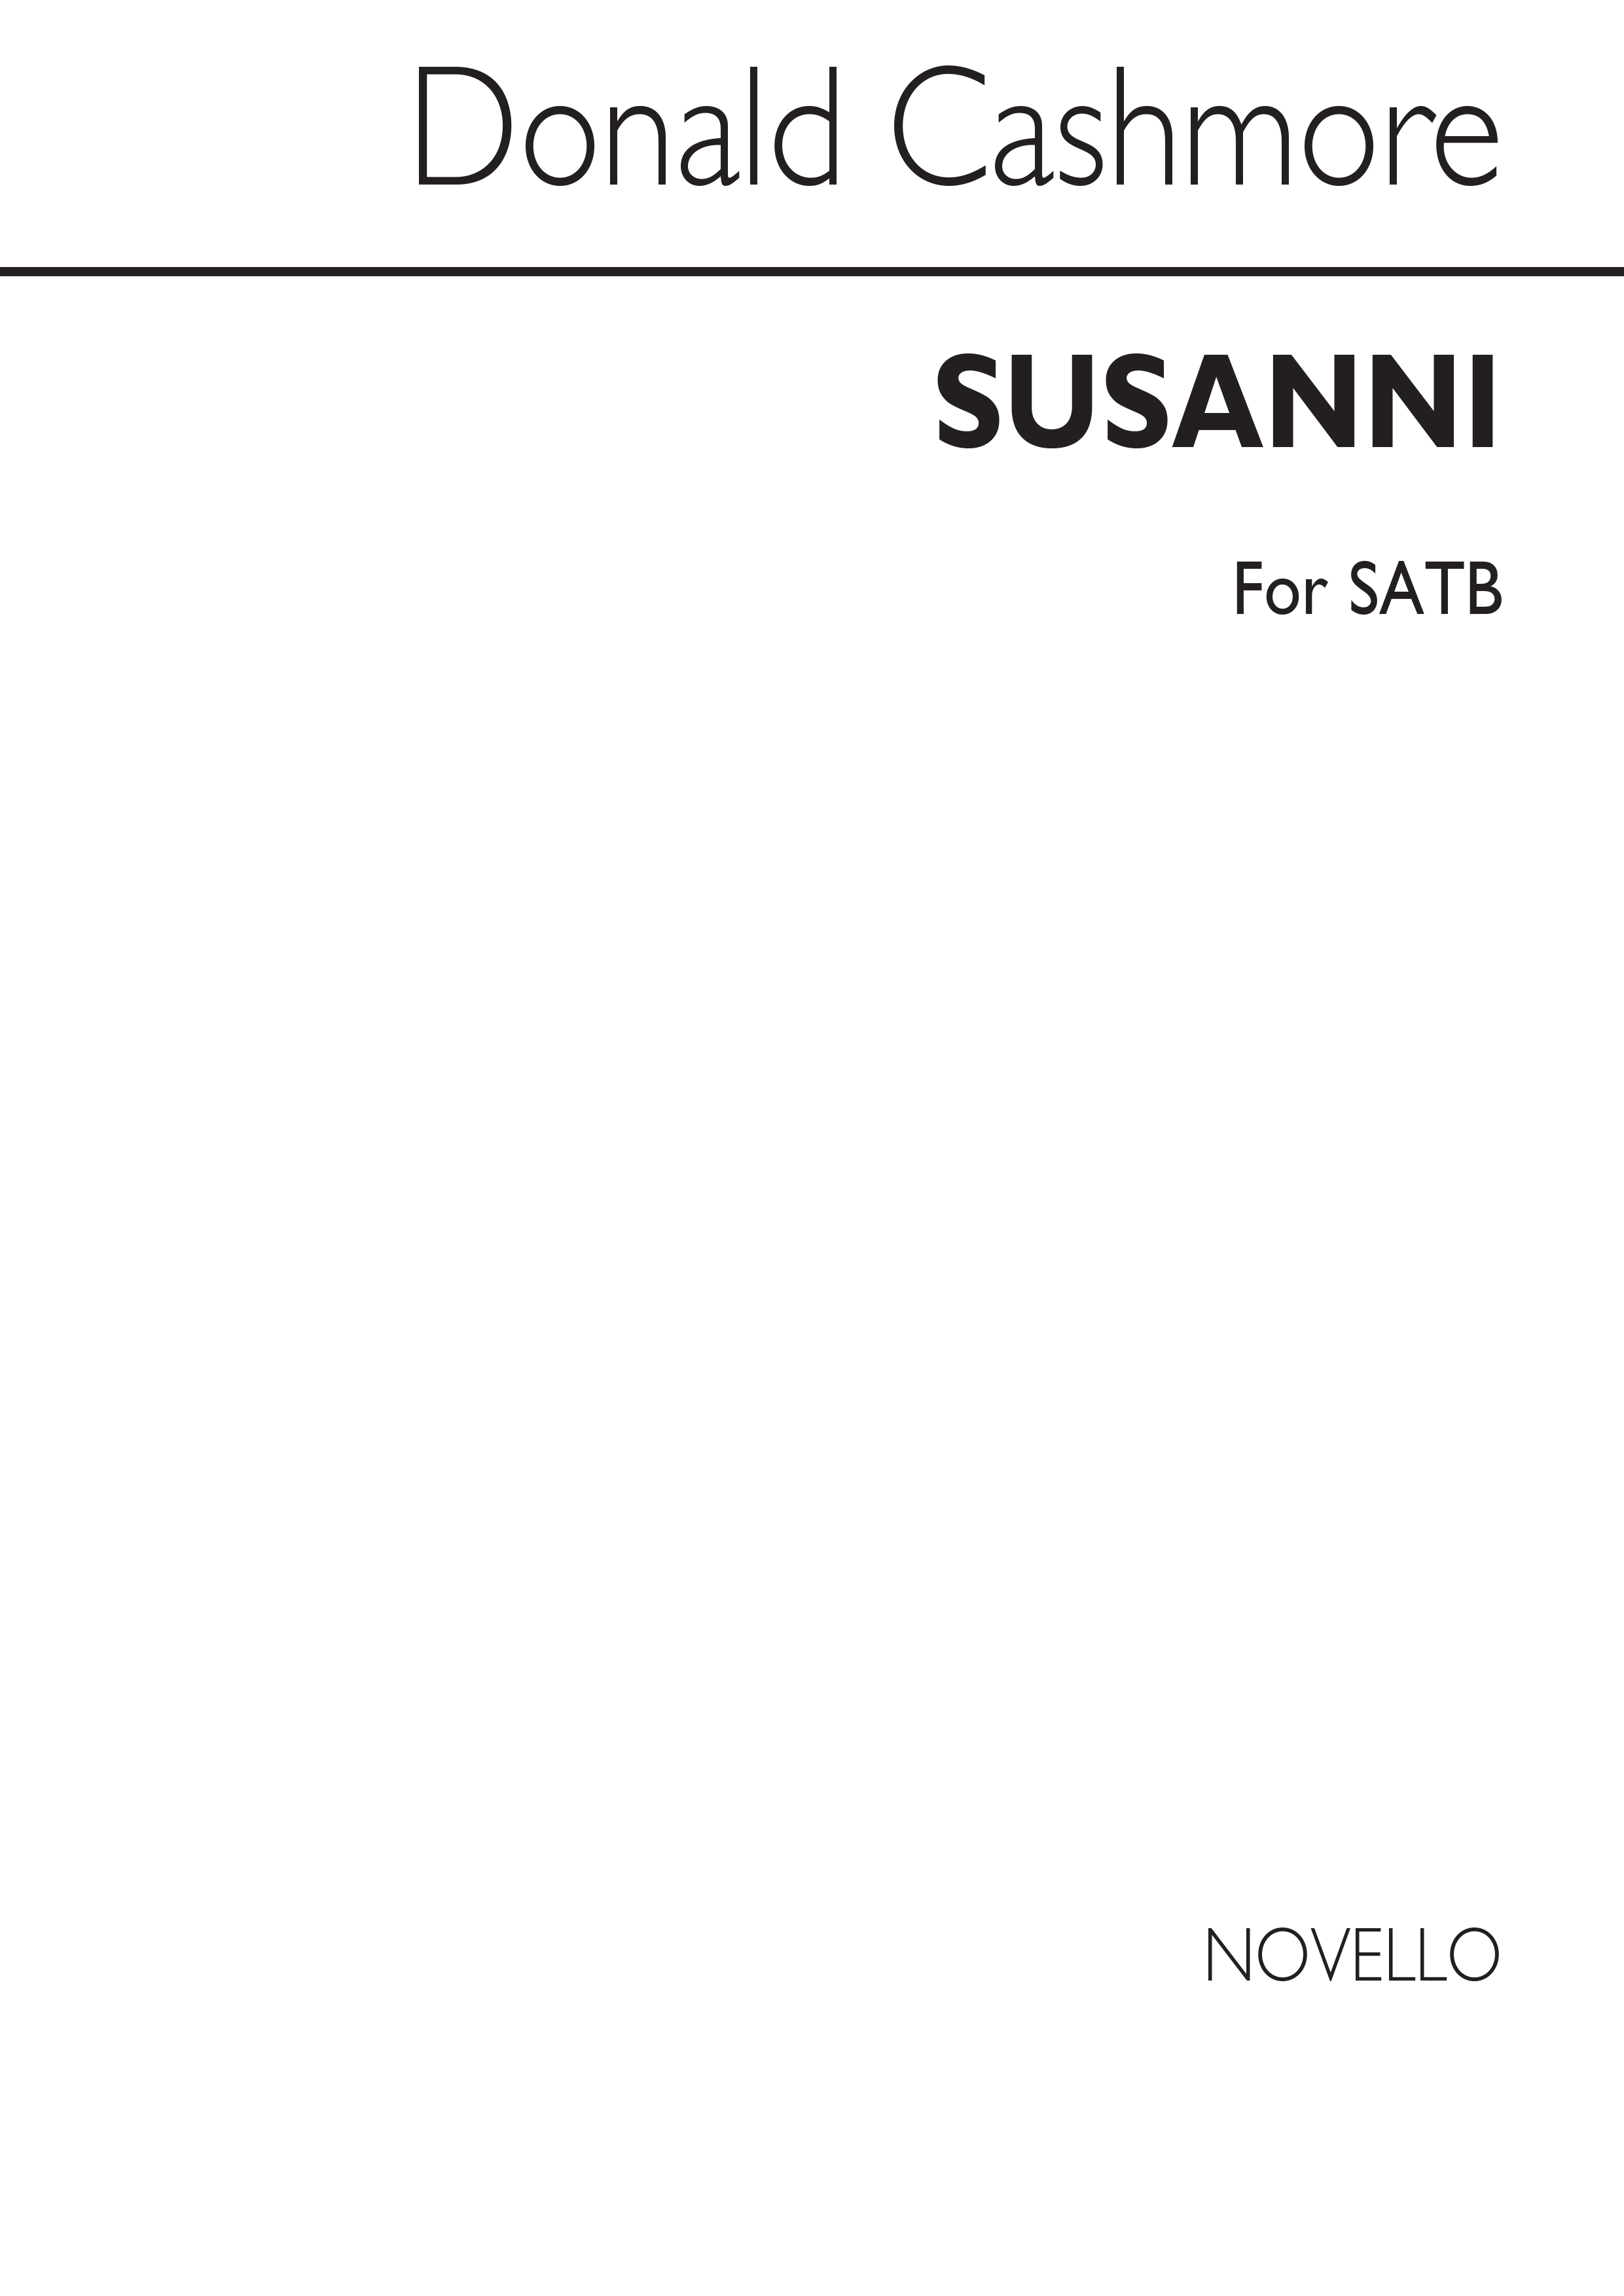 Cashmore: Susanni for SATB Chorus and Organ